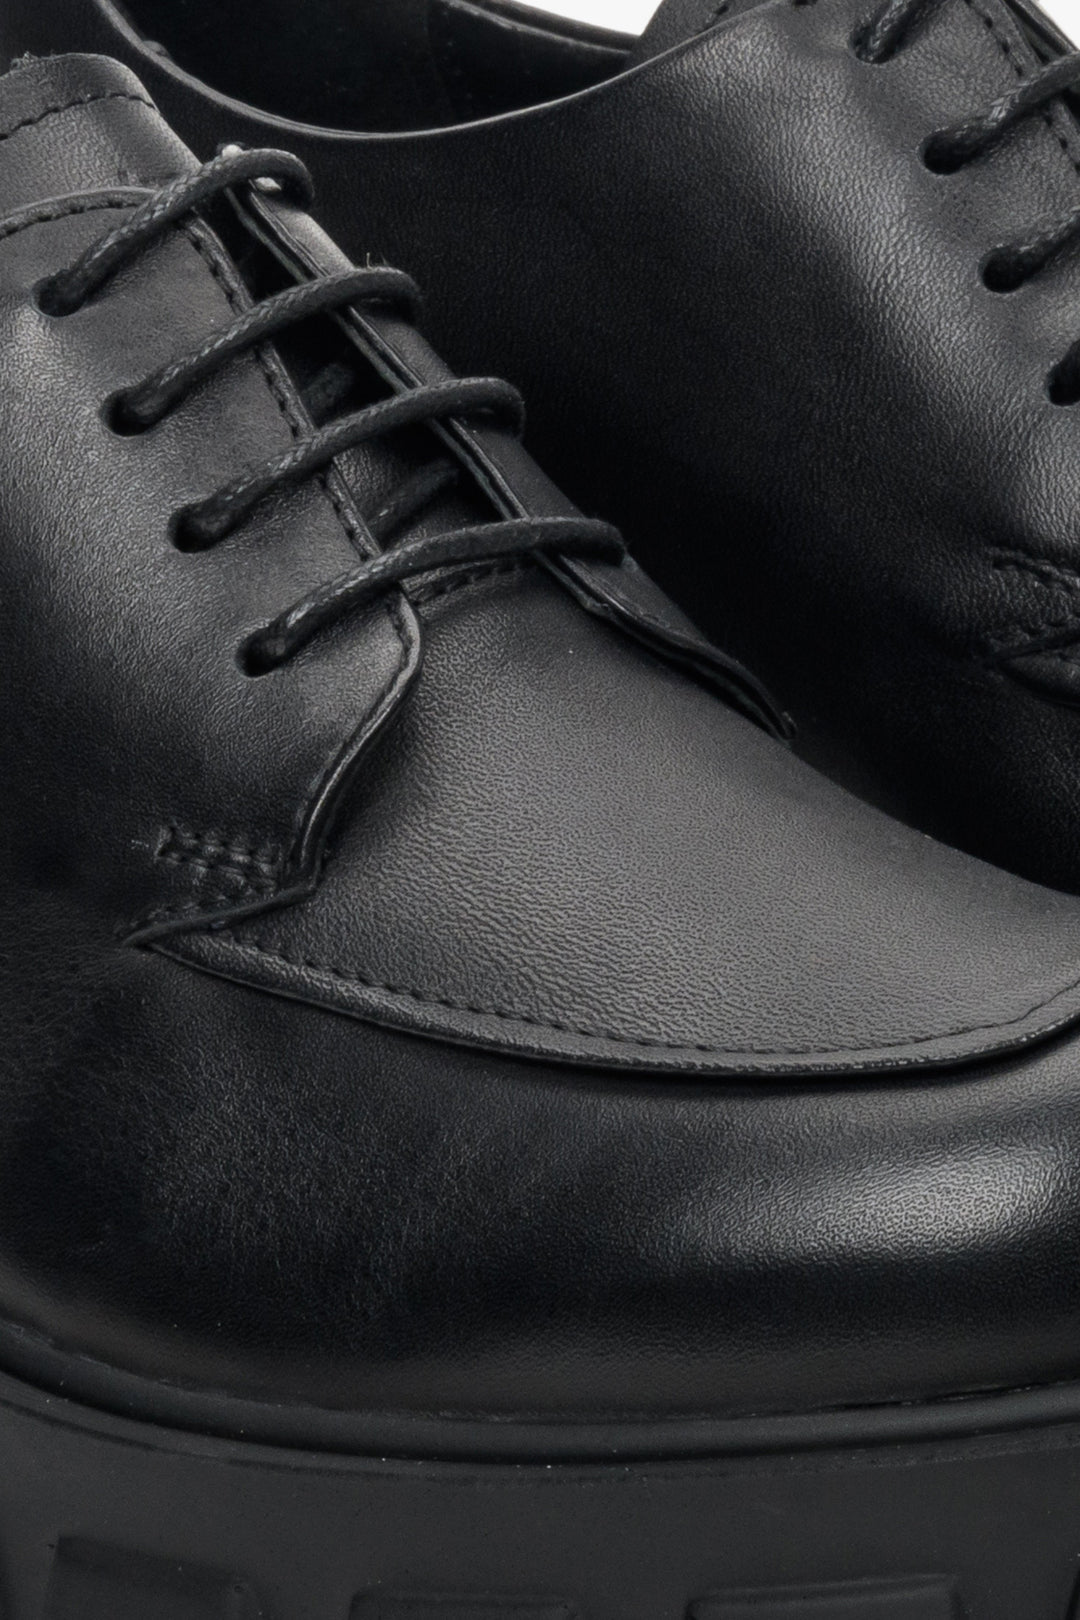 Women's black leather shoes by Estro - close-up on details.